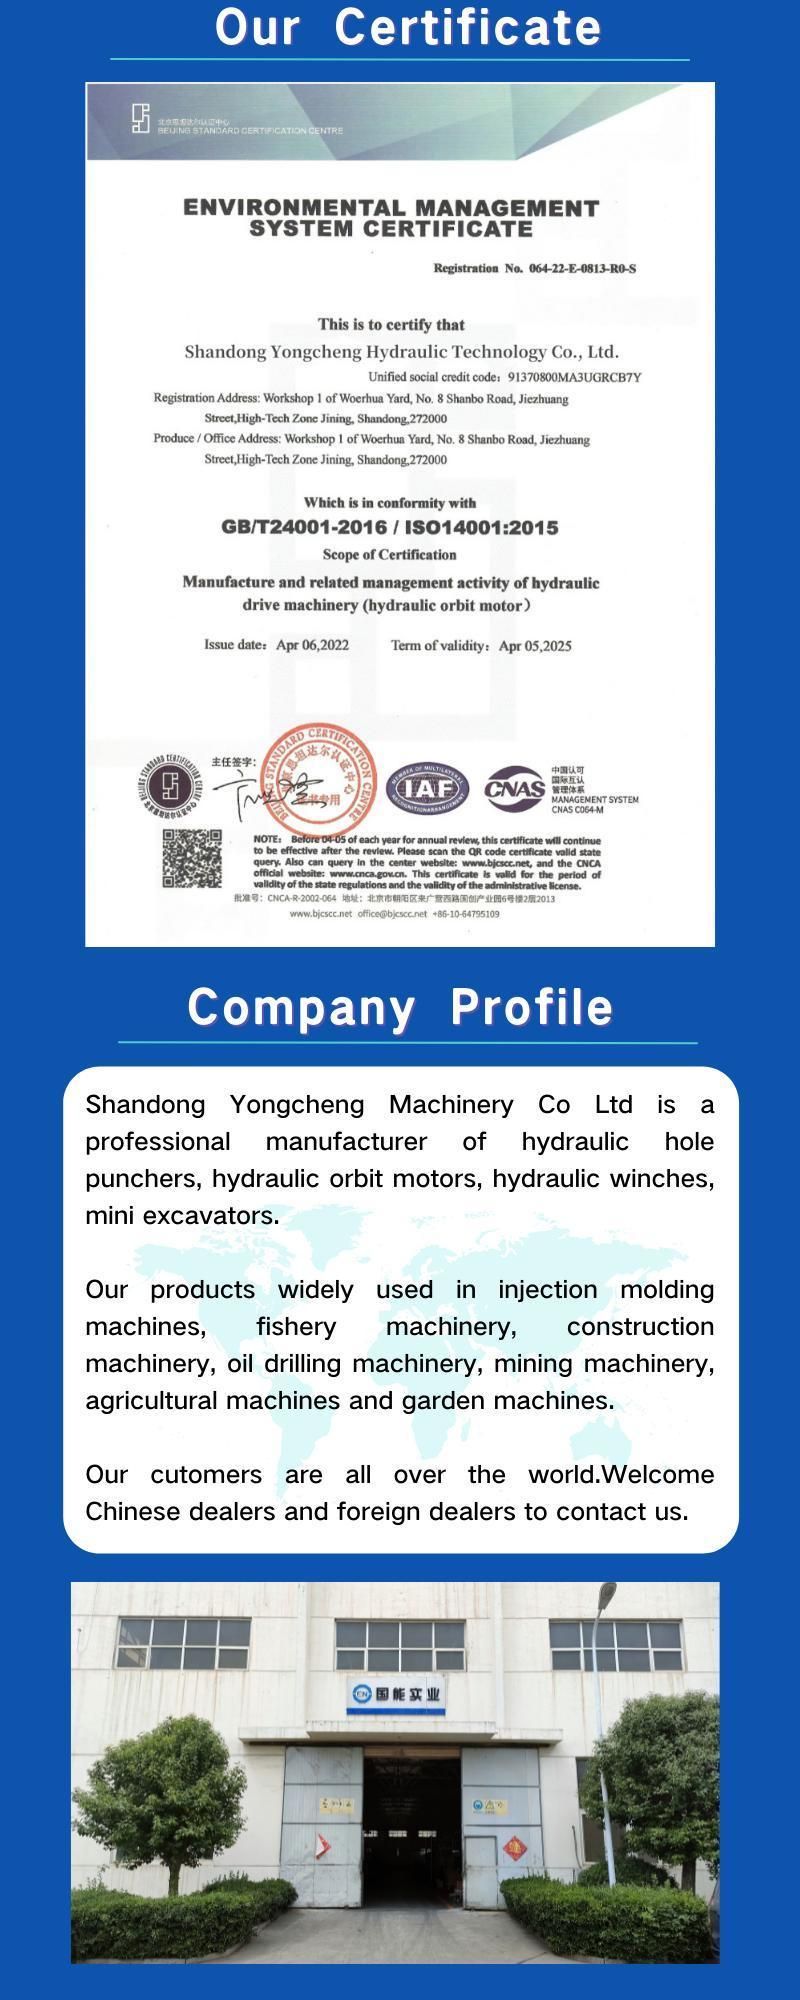 Injection Molding Machine Hydraulic Spare Parts Bm4-625 6 Teeth Spline Double-Ball Bearing Orbit Motor (245/310/390/490/625/800)